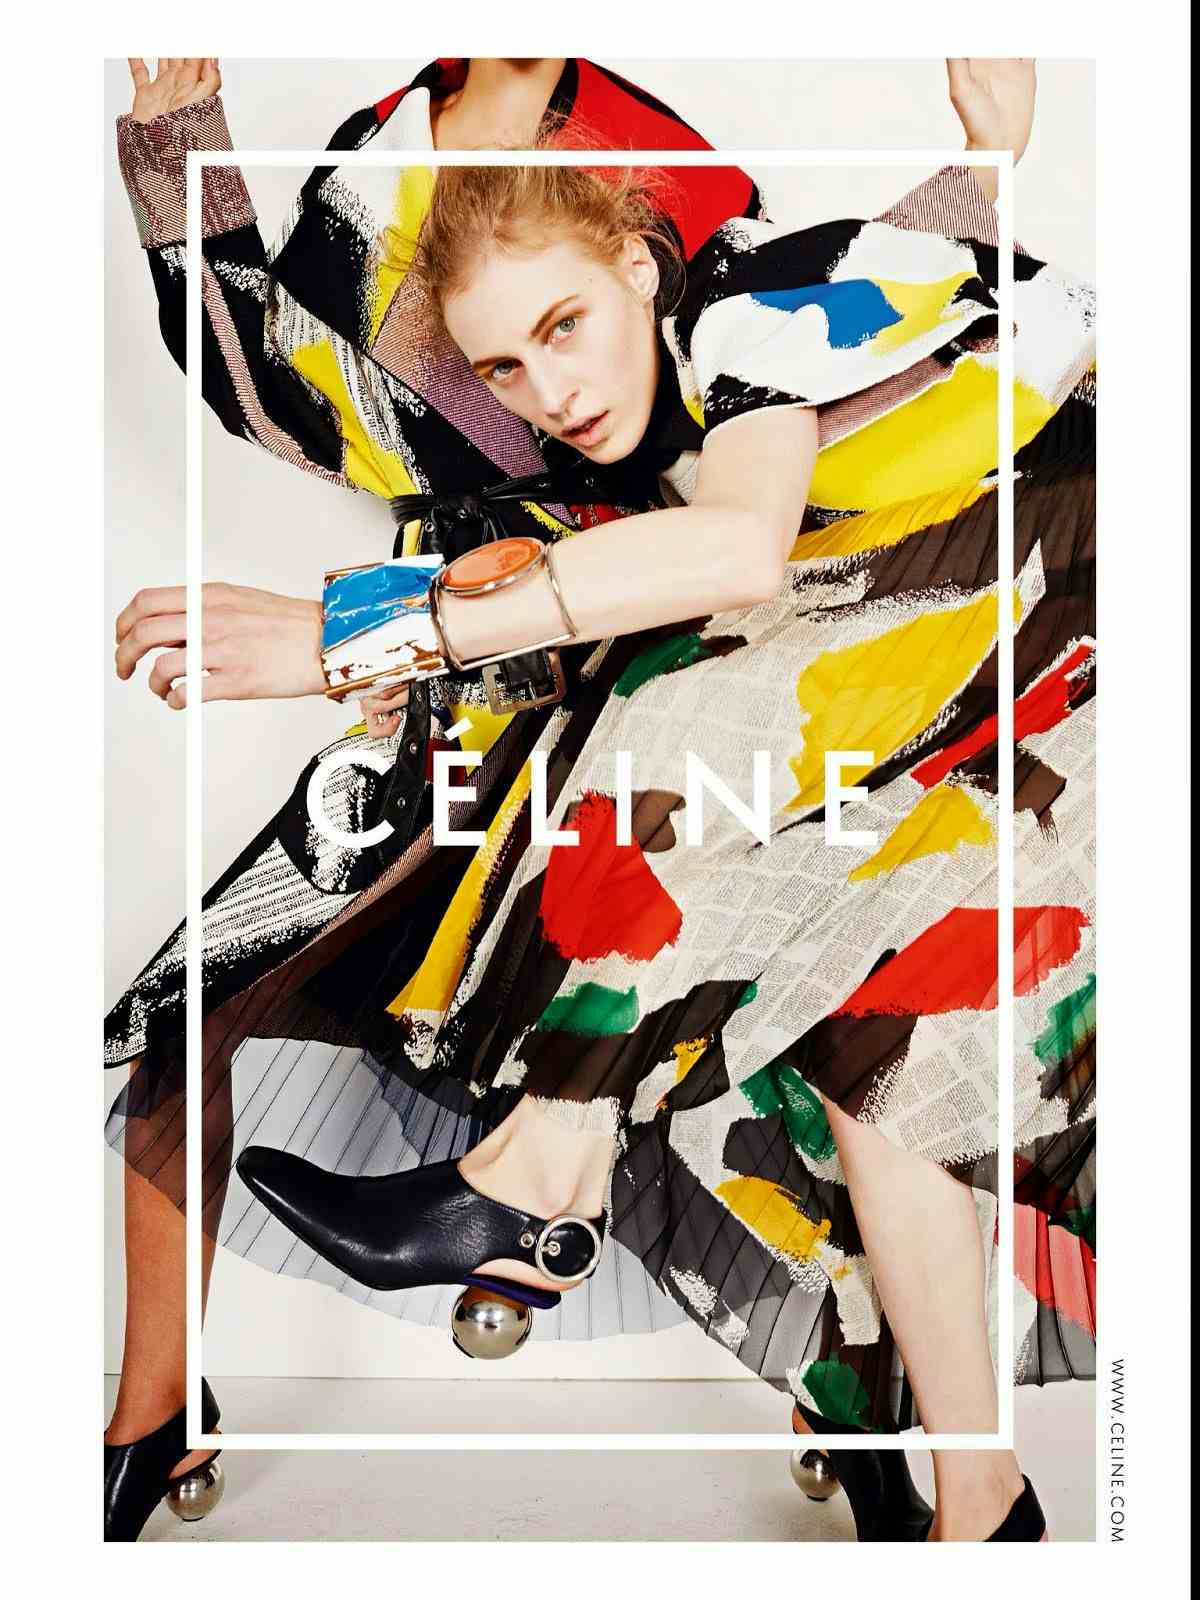 CÉLINE - S/S 2014
Photographer: Juergen Teller
Model: Amanda Murphy - Binx Walton - Chiharu Okunugi - Daria Werbowy
Stylist: Phoebe Philo
Location: London - UK